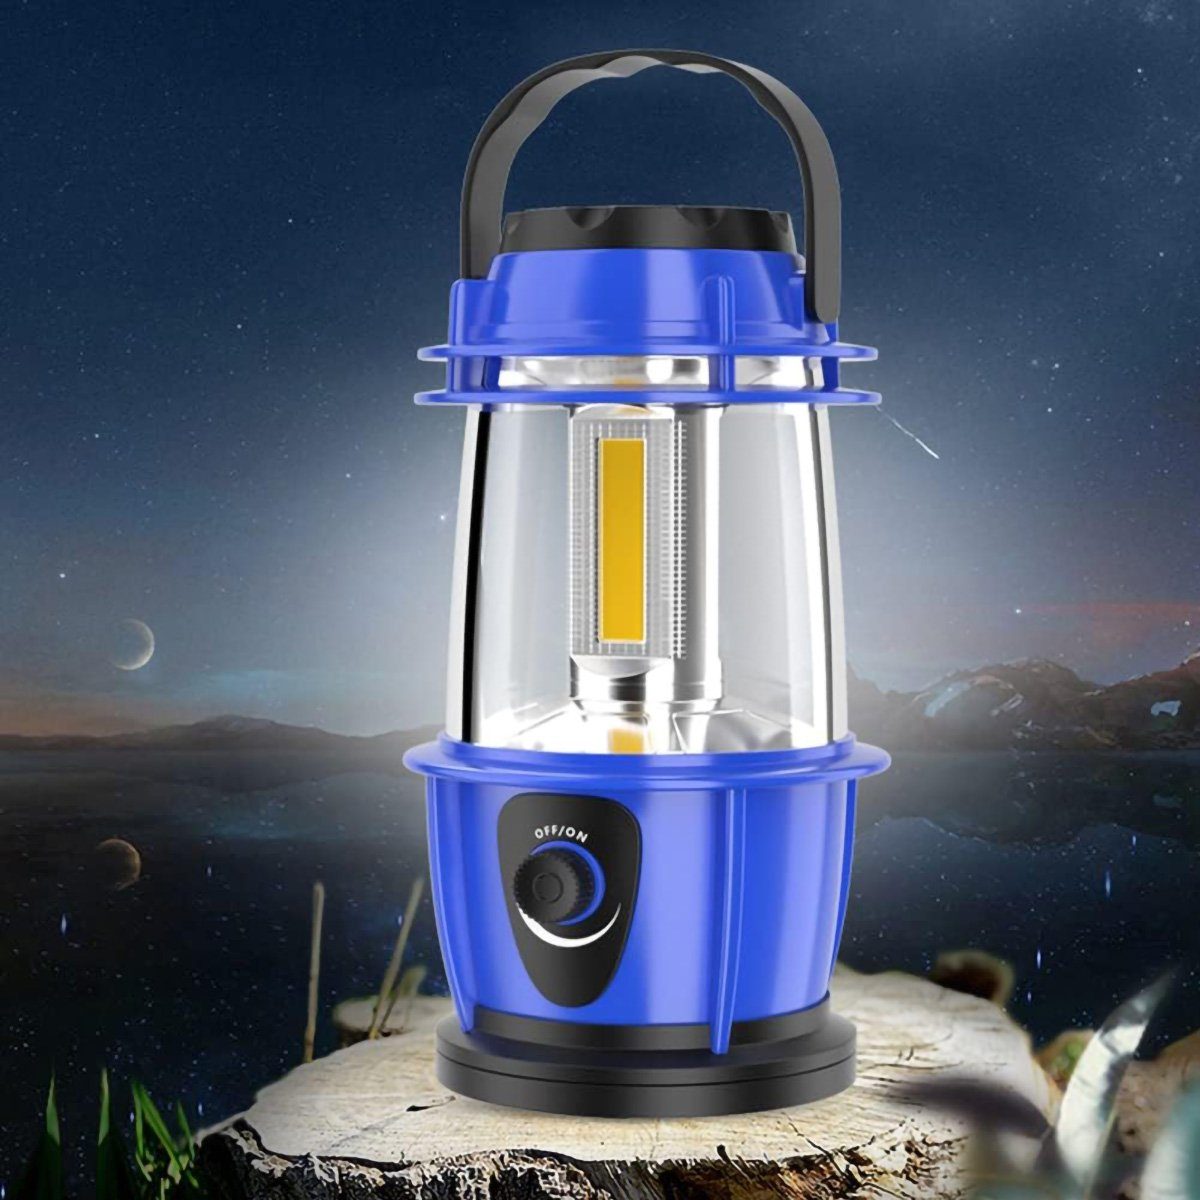 yozhiqu LED Laterne LED-Campinglampe batteriebetrieben, tragbare Camping-Laterne, wasserdichtes Zelt Licht für Notfälle, Camping, Outdoor, Wandern